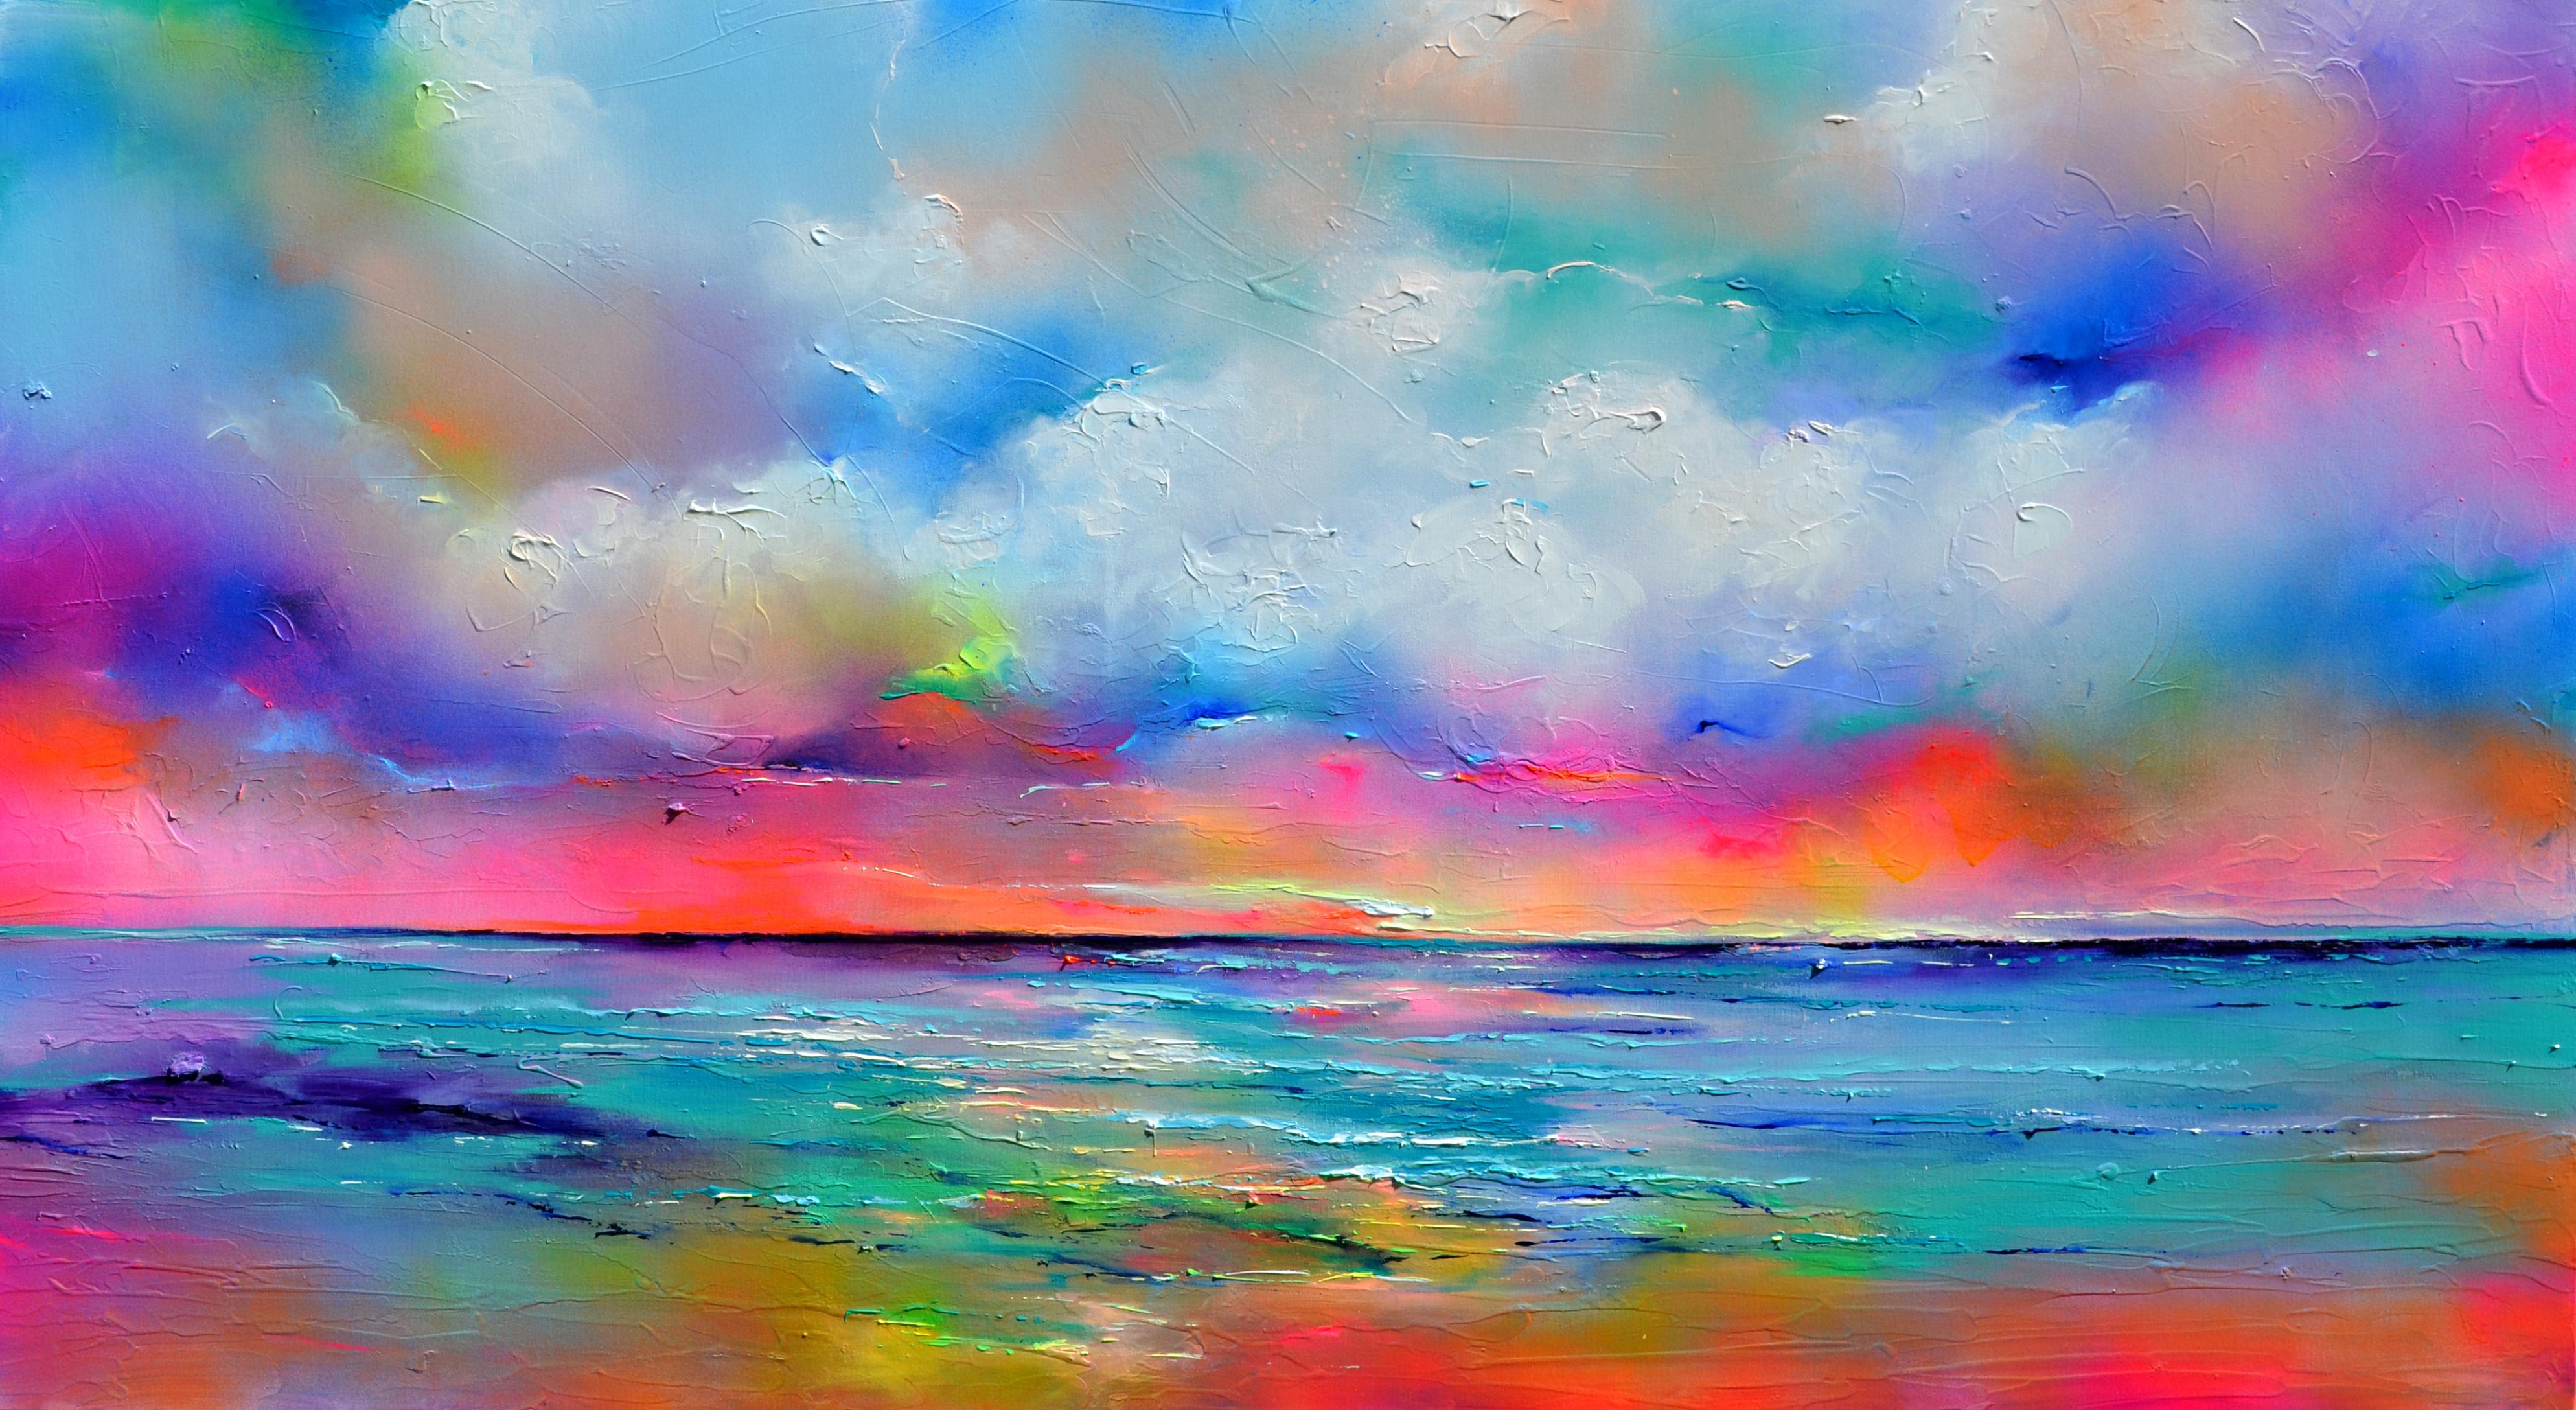 New Horizon 180 - Large Seascape, Sunset, Sunrise, Ocean, Beach Painting